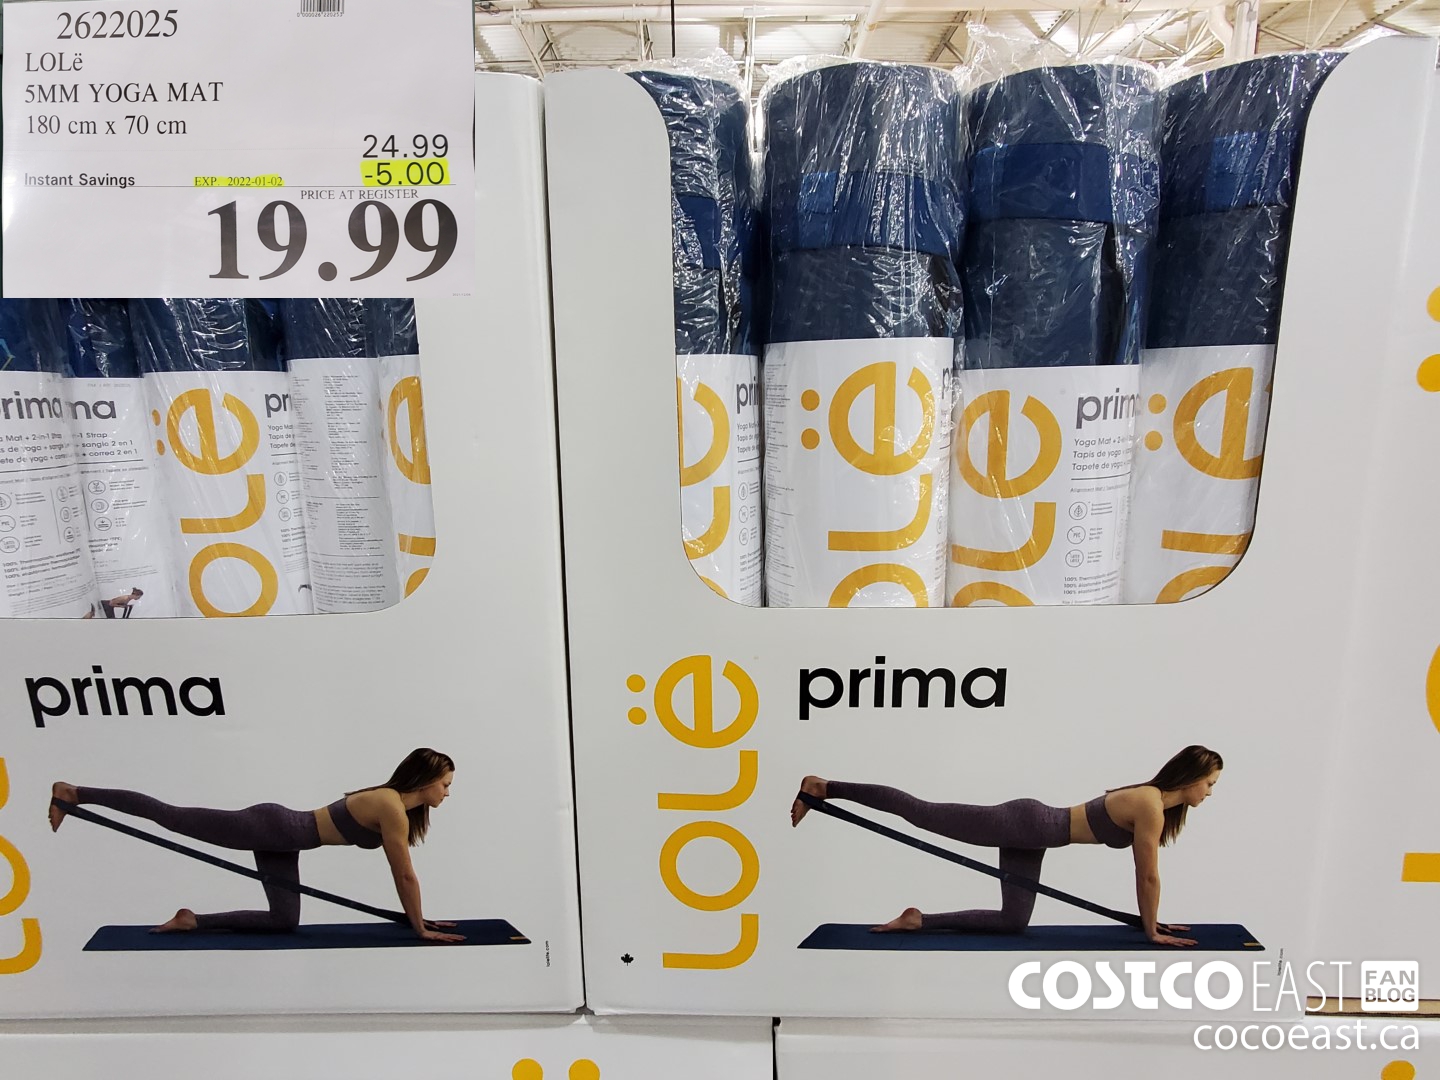 Costco Yoga Mat, Lolë Prima Yoga Mat w/ Strap